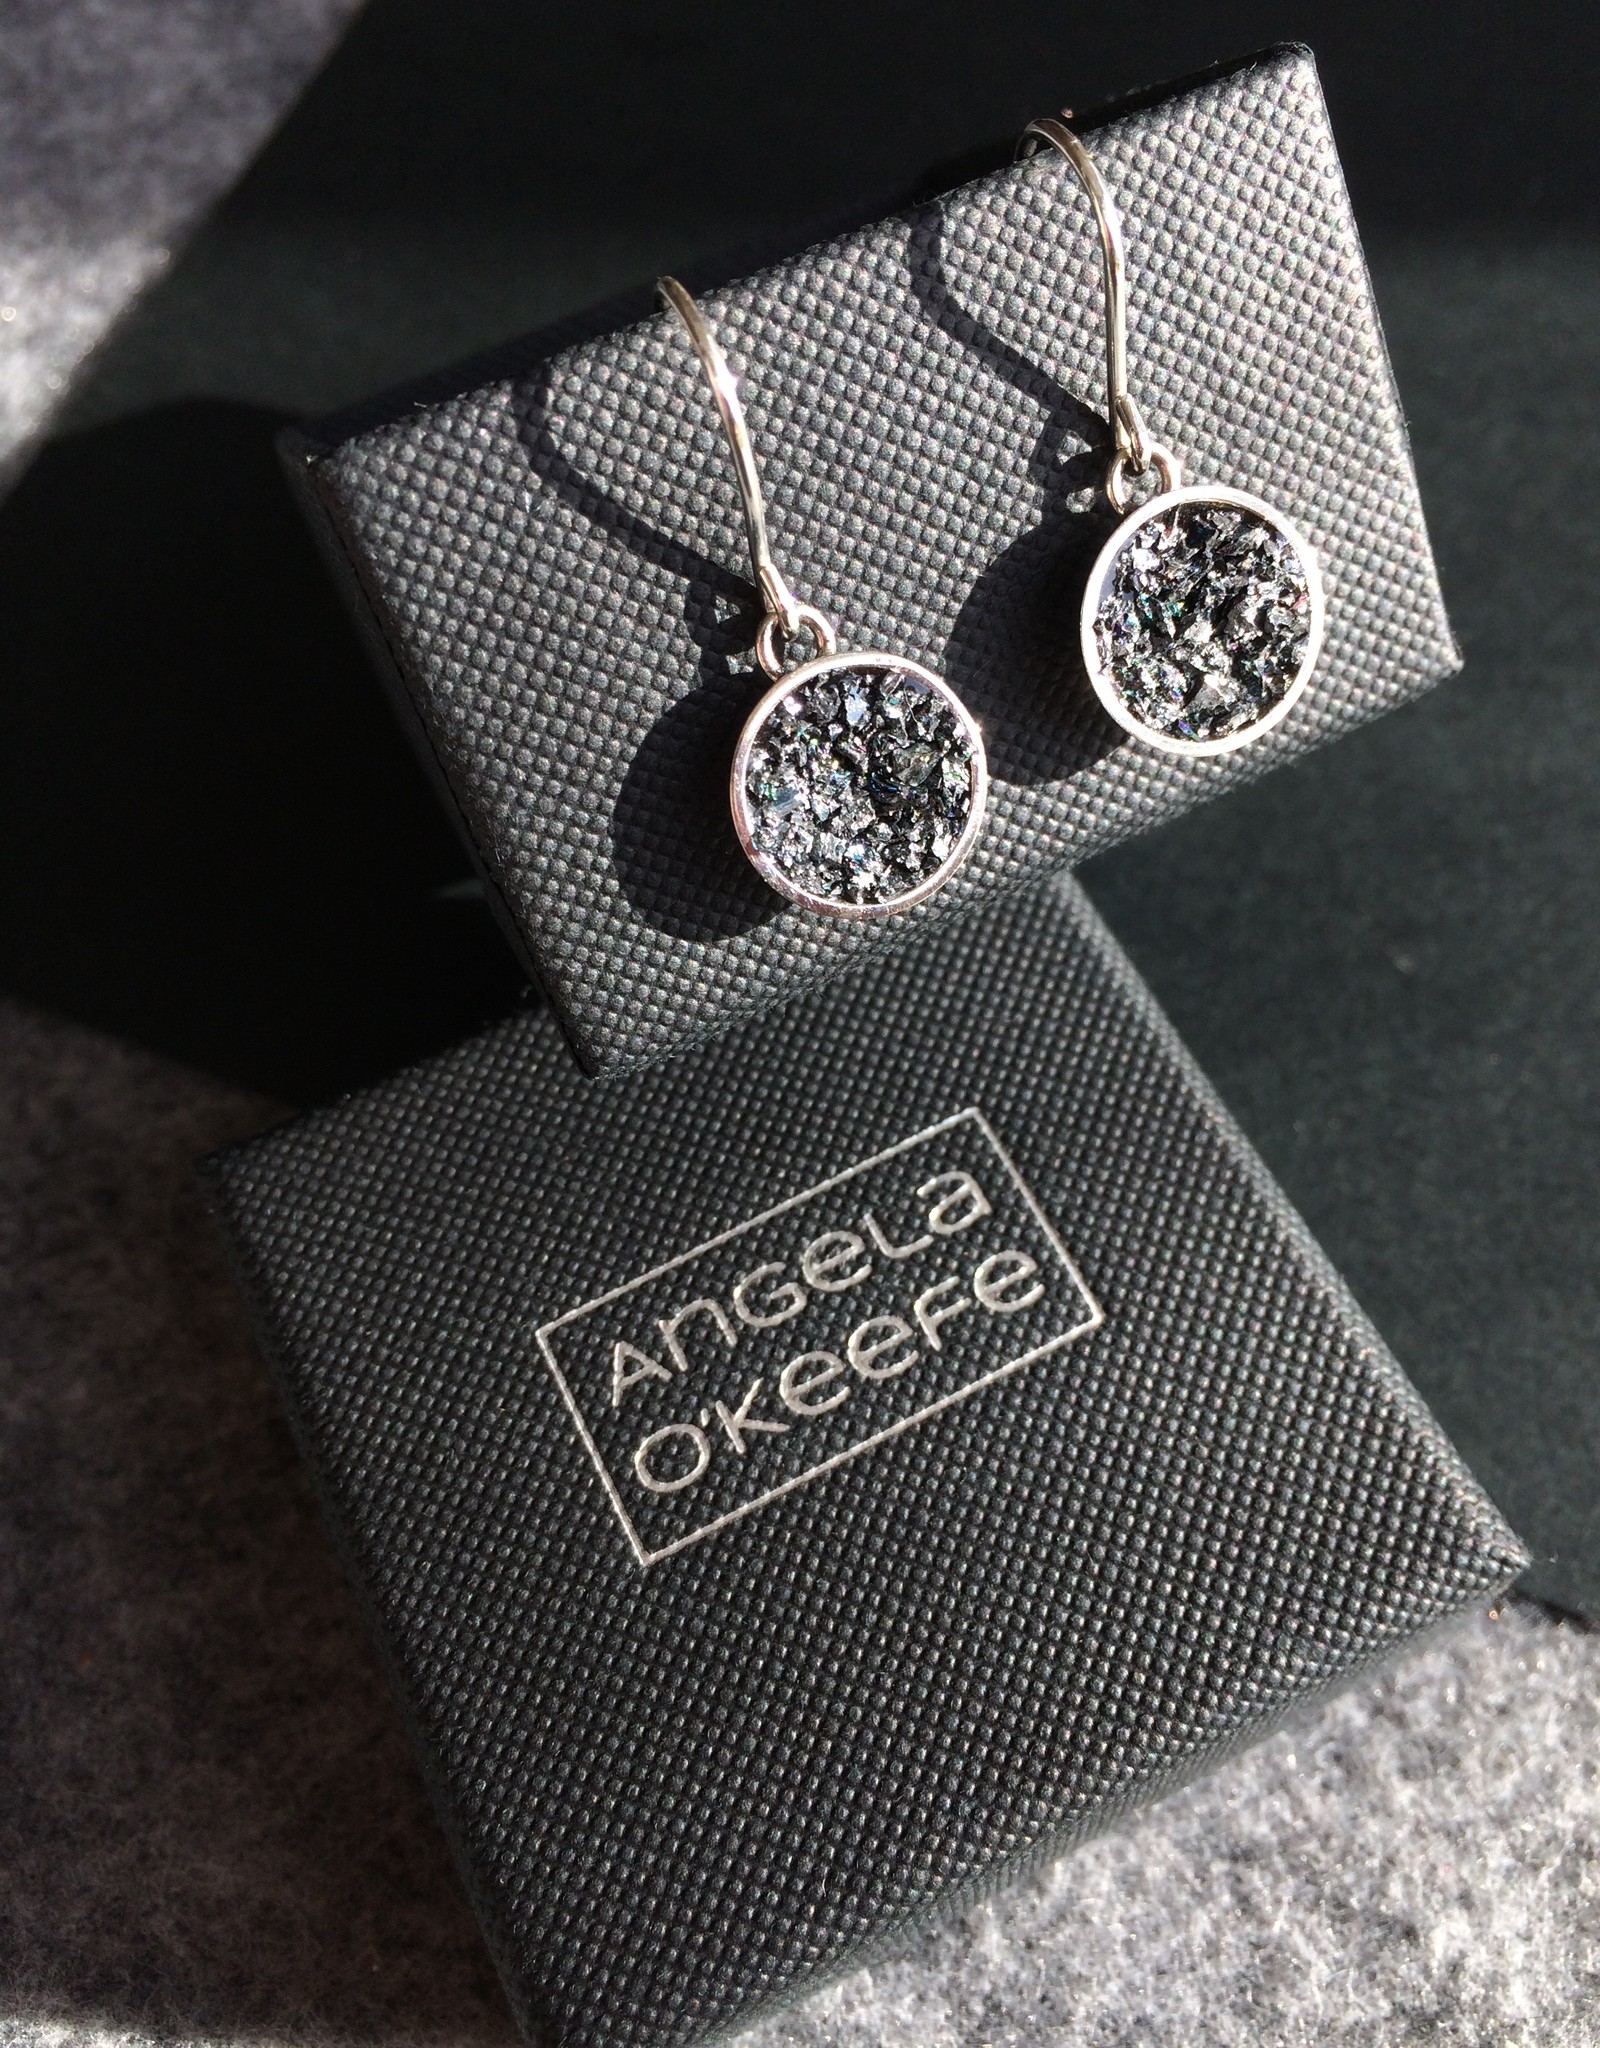 Angela O'Keefe AOK 9 Sphere earrings